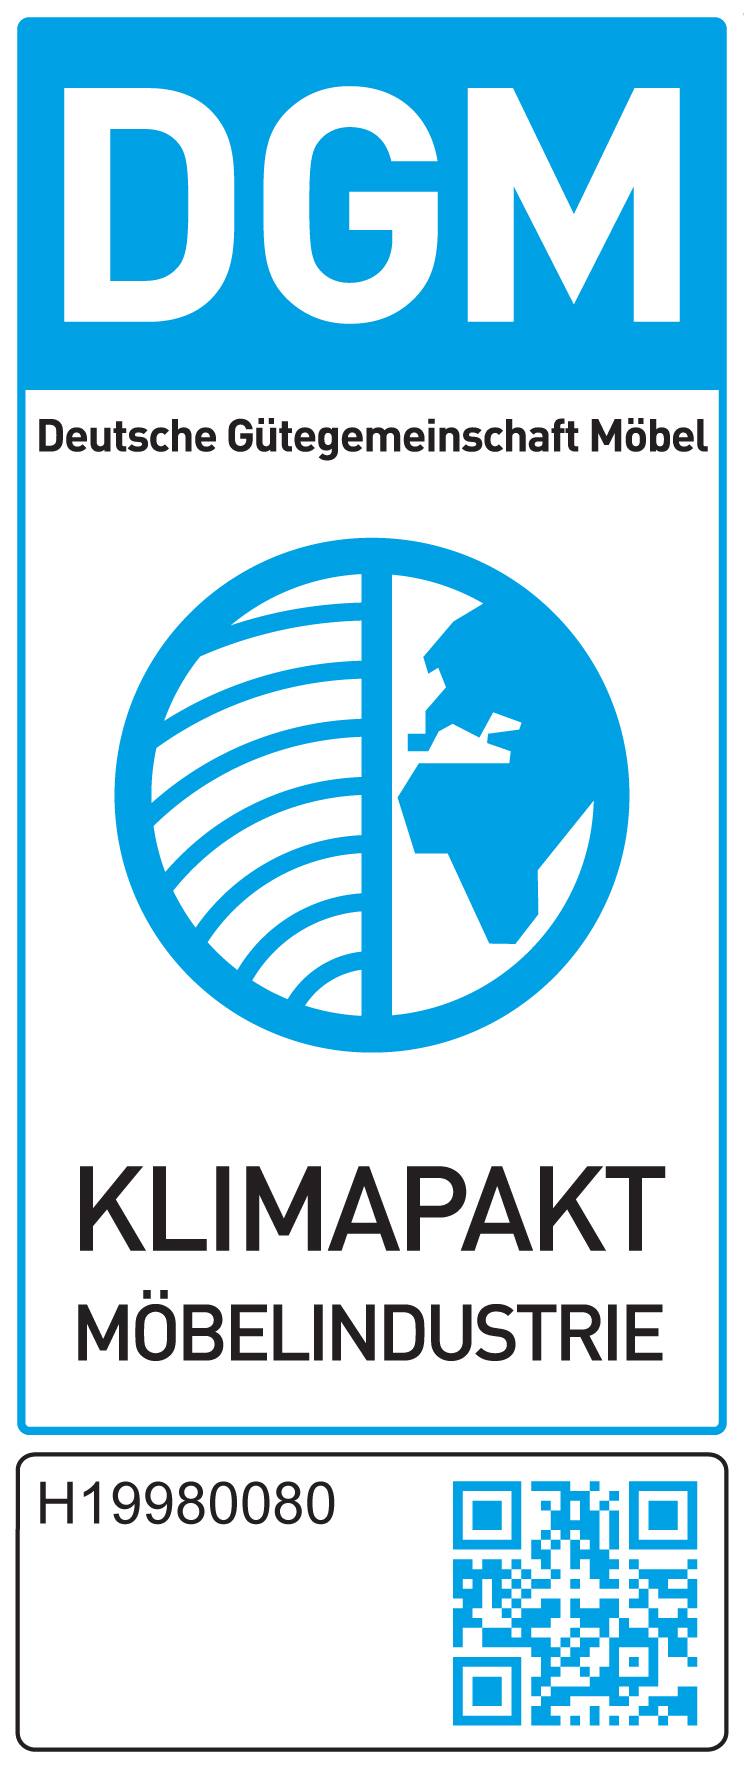 PM-2022-DGM-Klimapakt-Koinor.